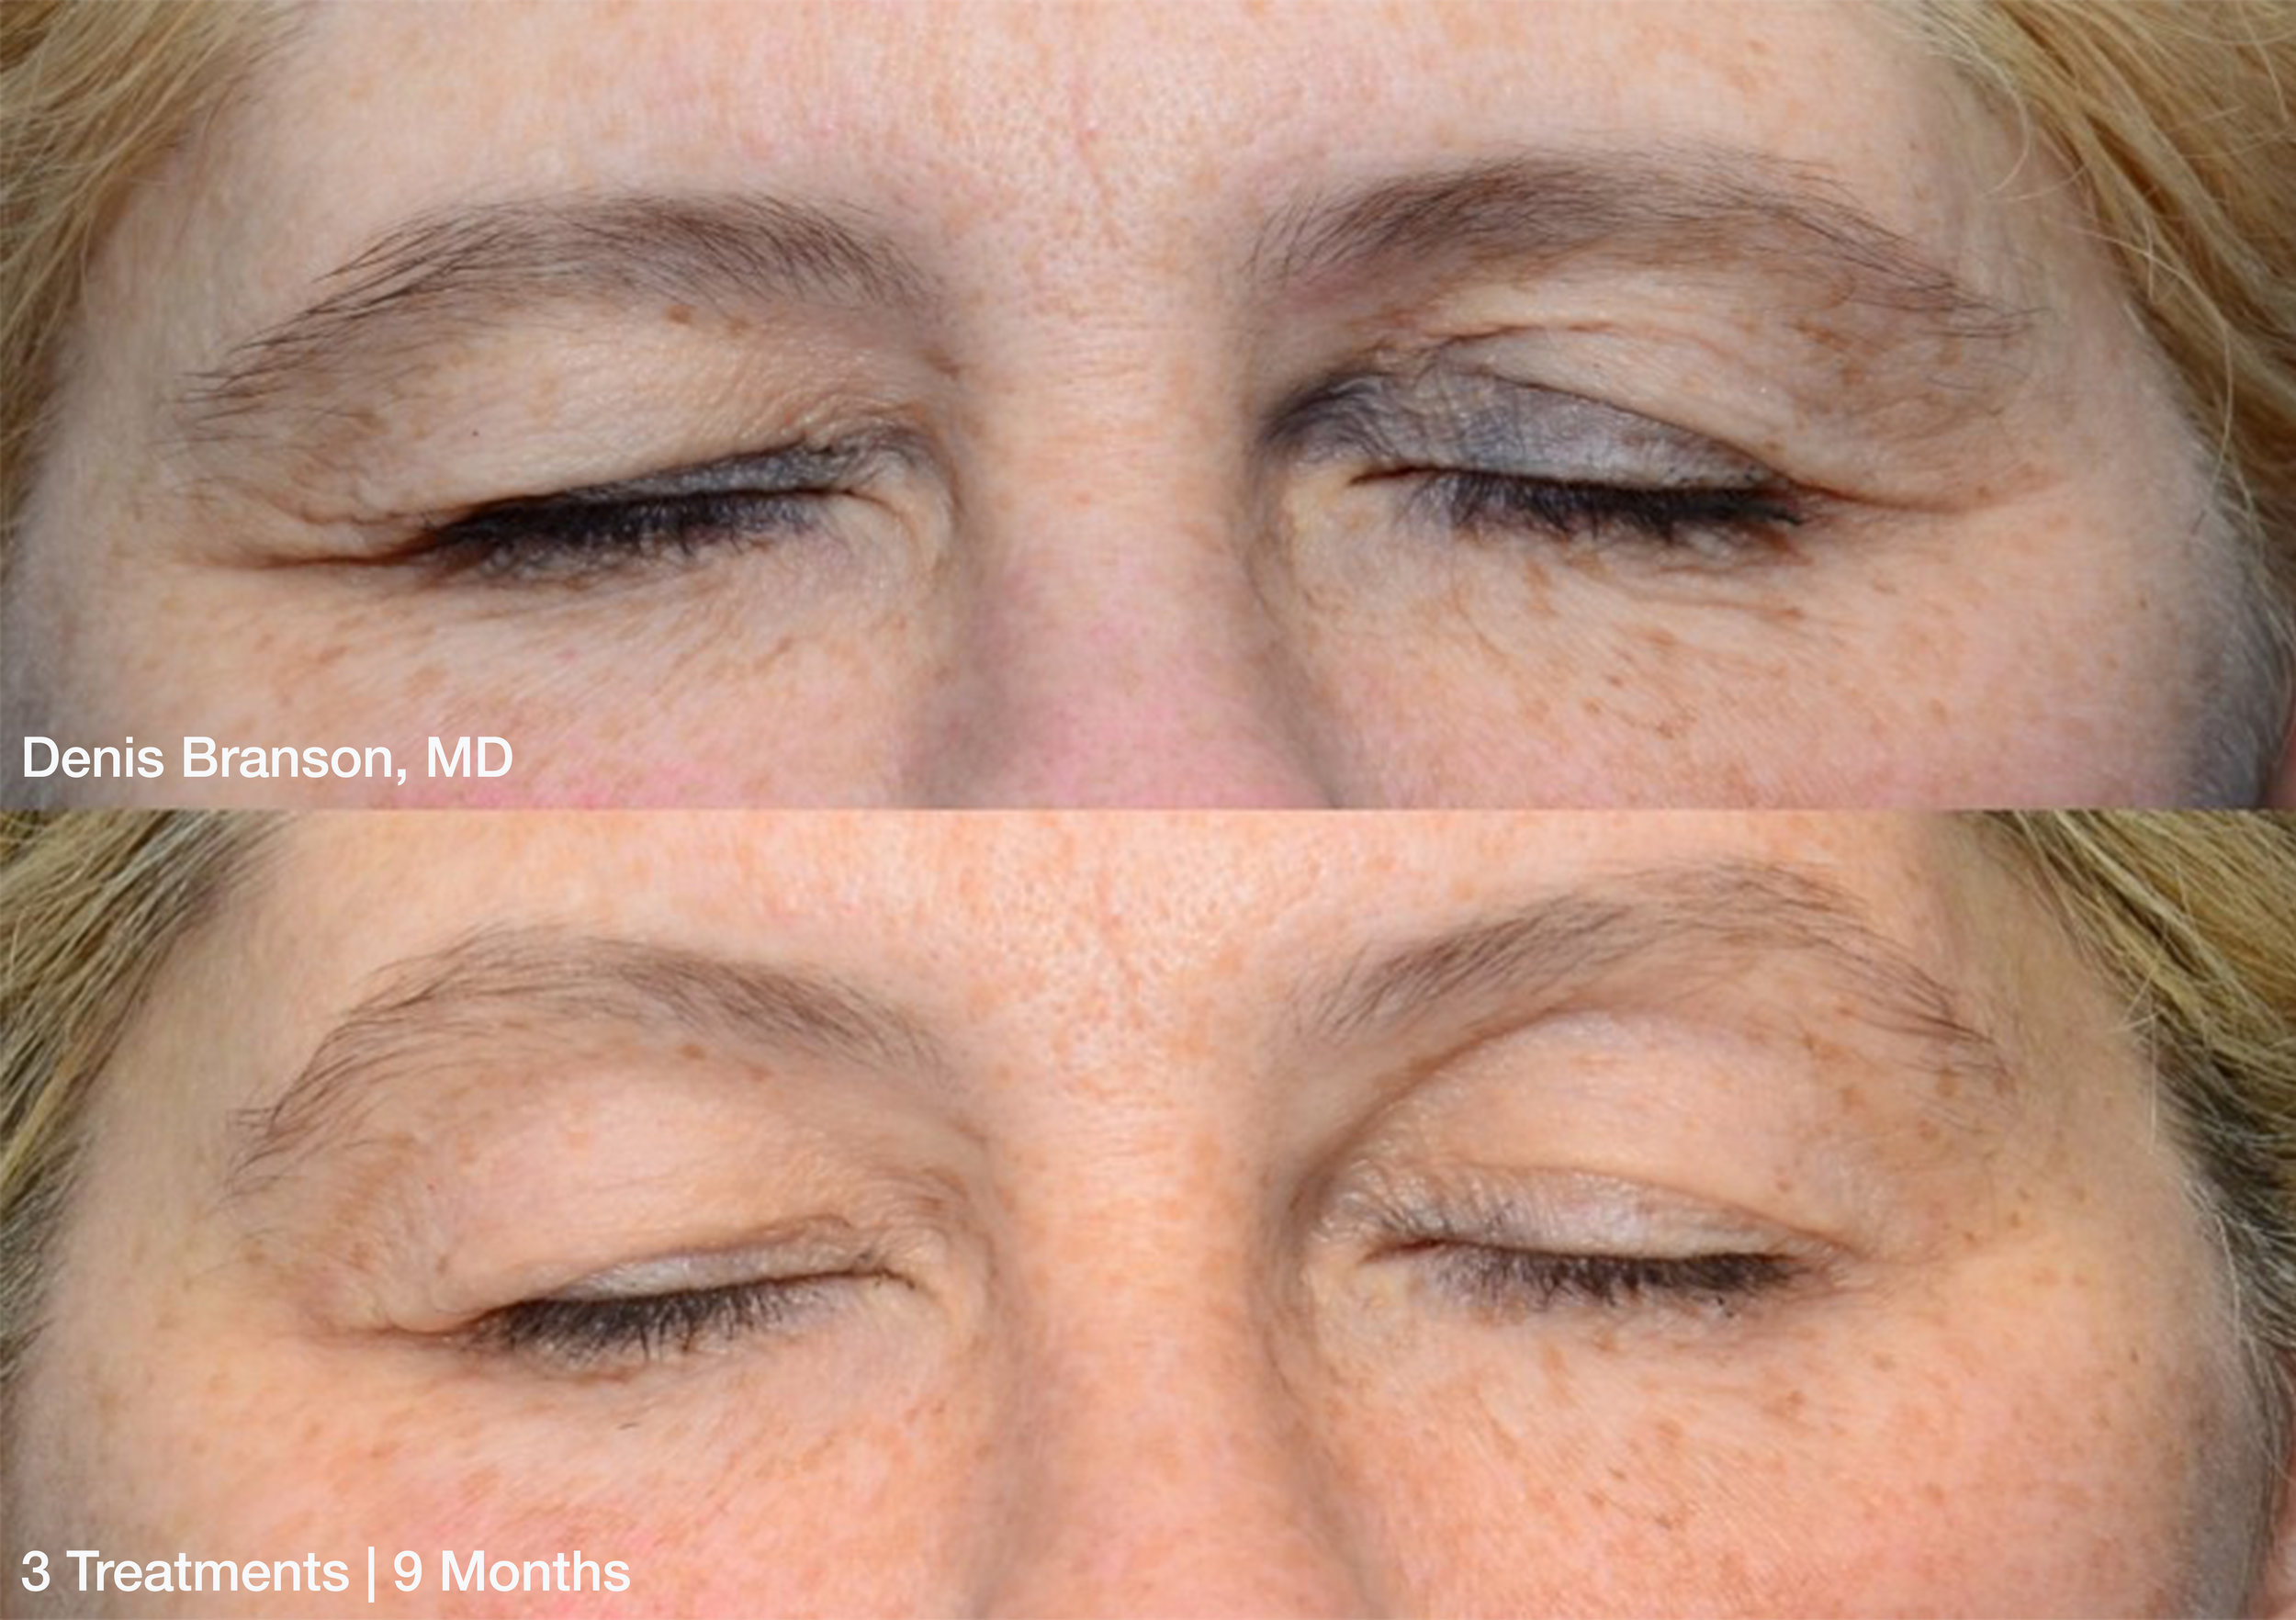 Denis-Branson_ThermiSmooth-Face-Eyes_3-treatments-9-months_Patient-1.jpg